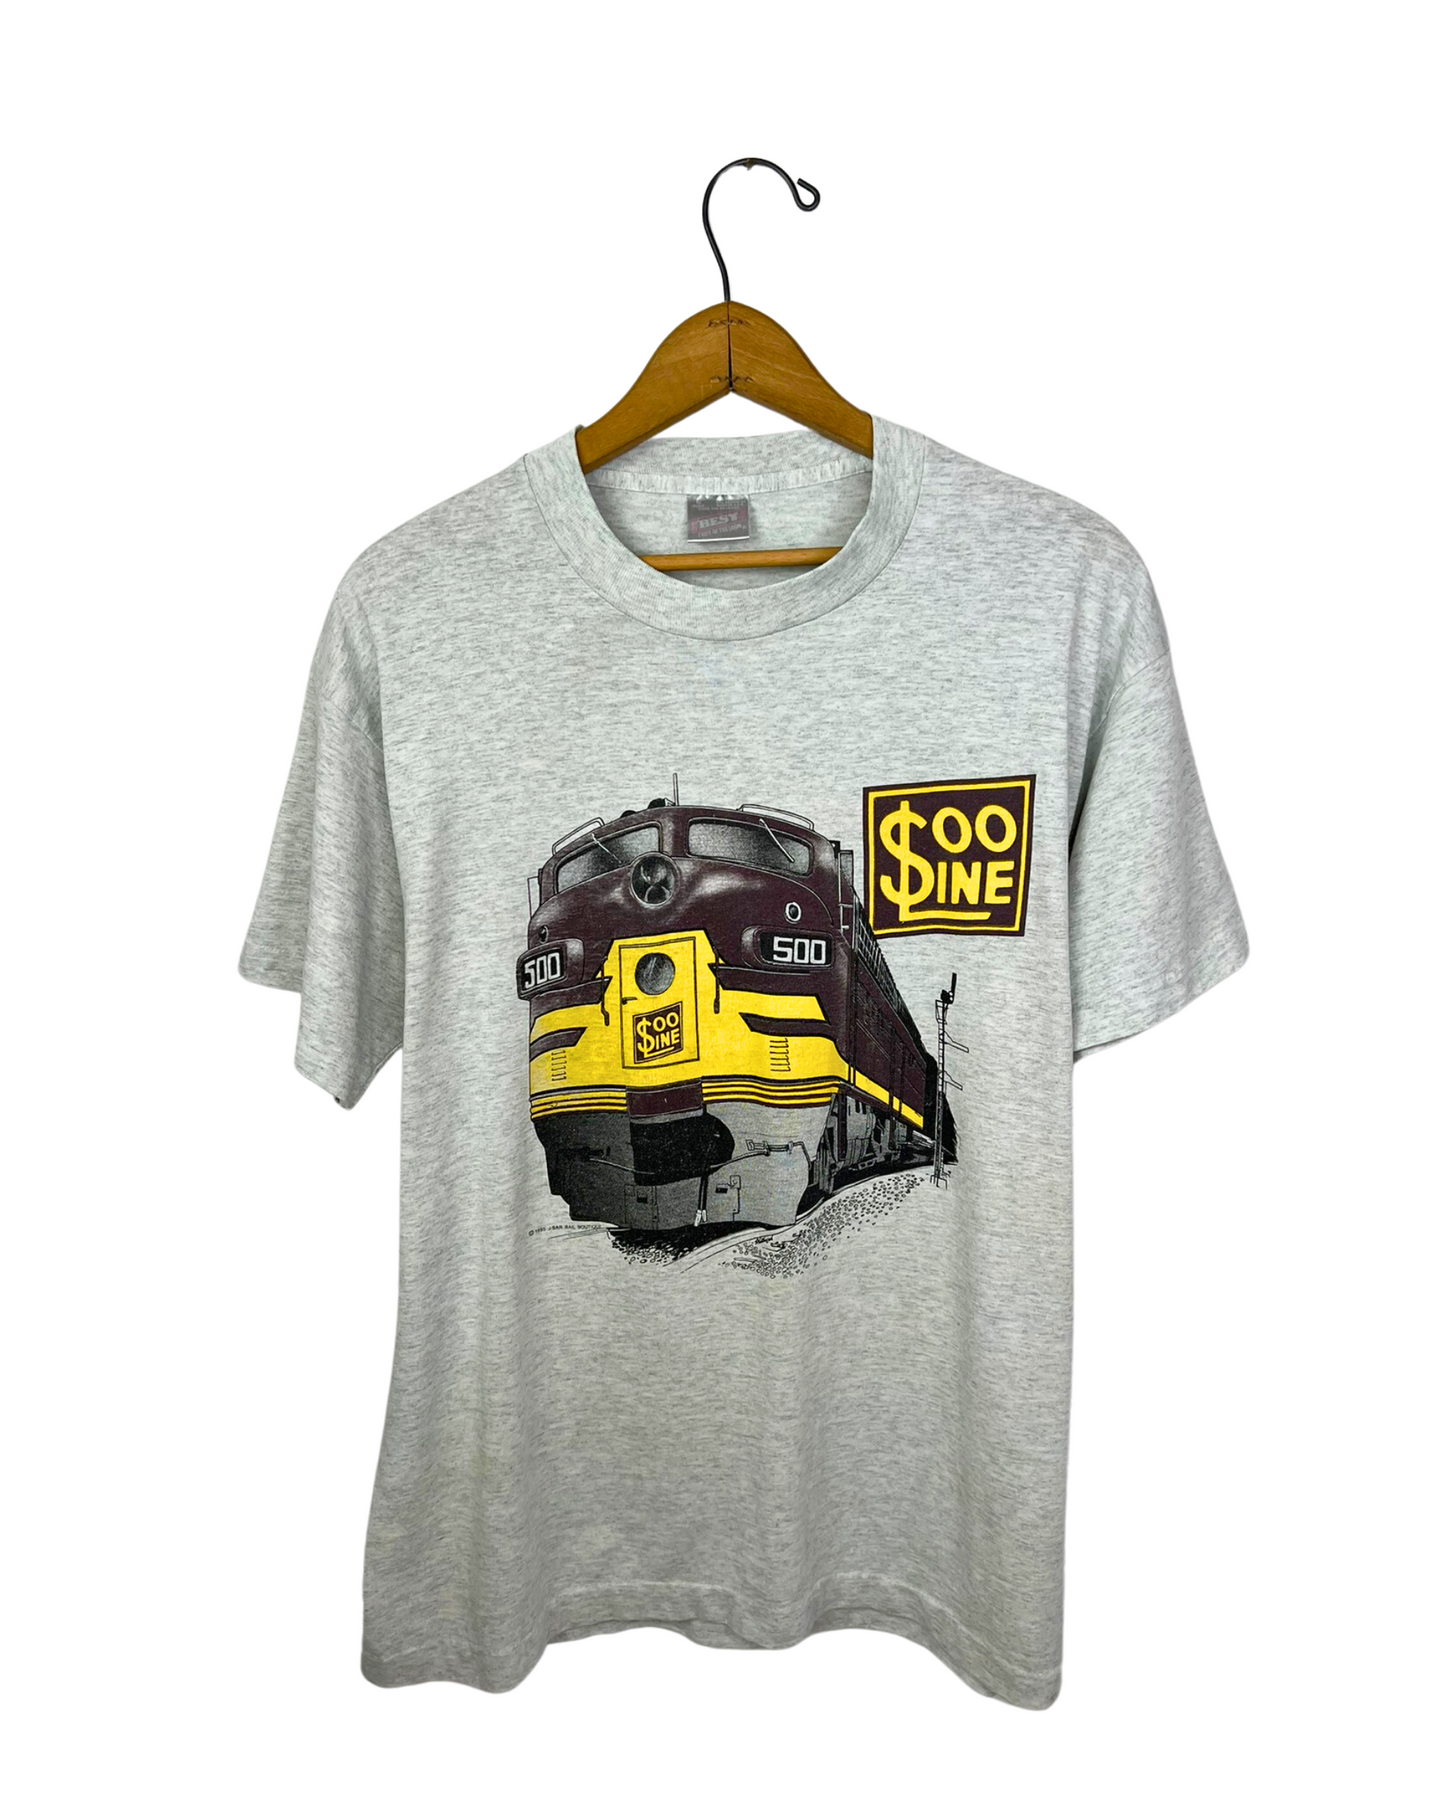 1995 Stevens Point Wisconsin $00 Line Railroad Train T-Shirt Size Large